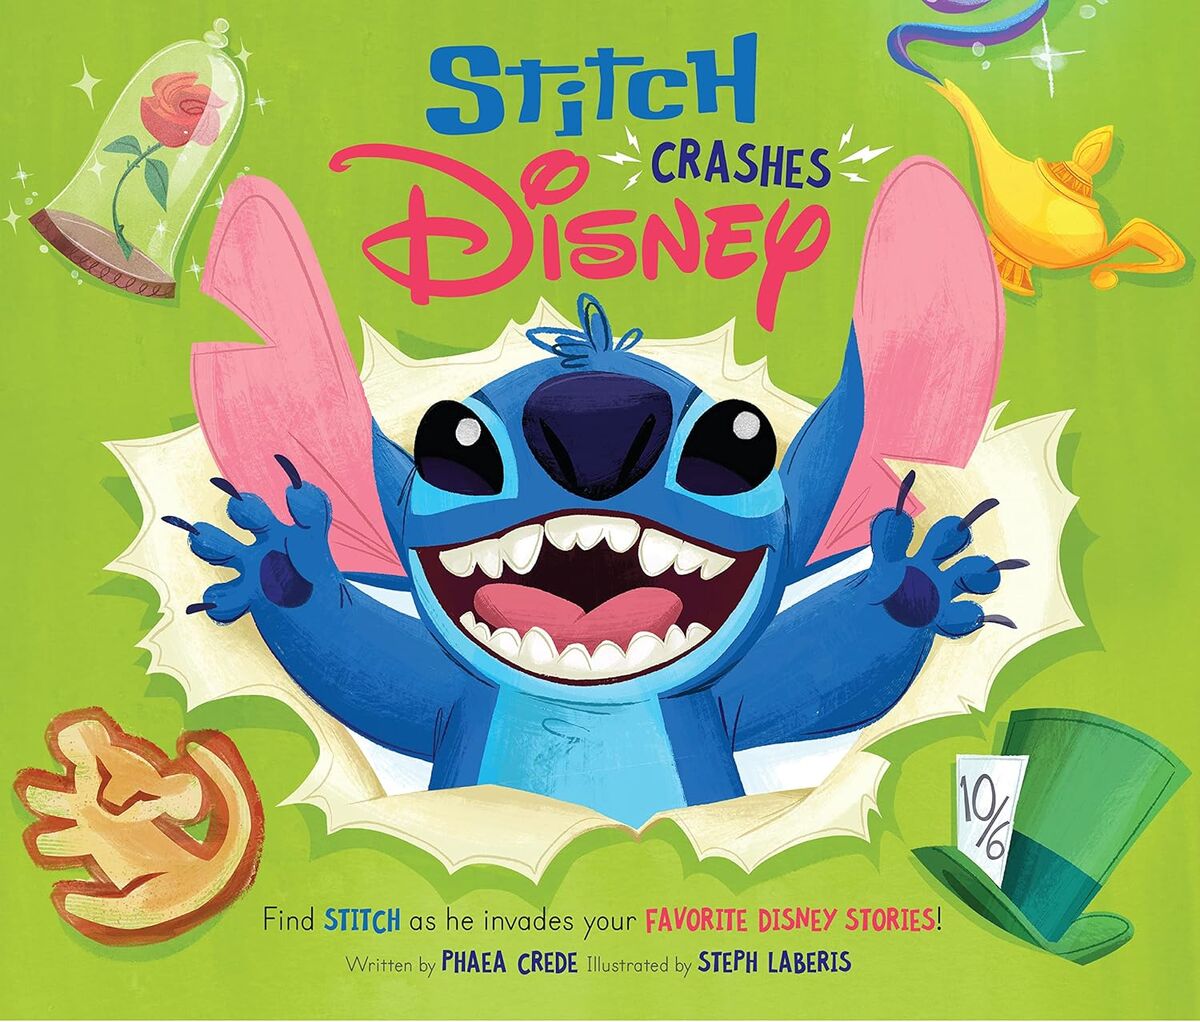 Stitch Crashes Disney (book) | Disney Wiki | Fandom